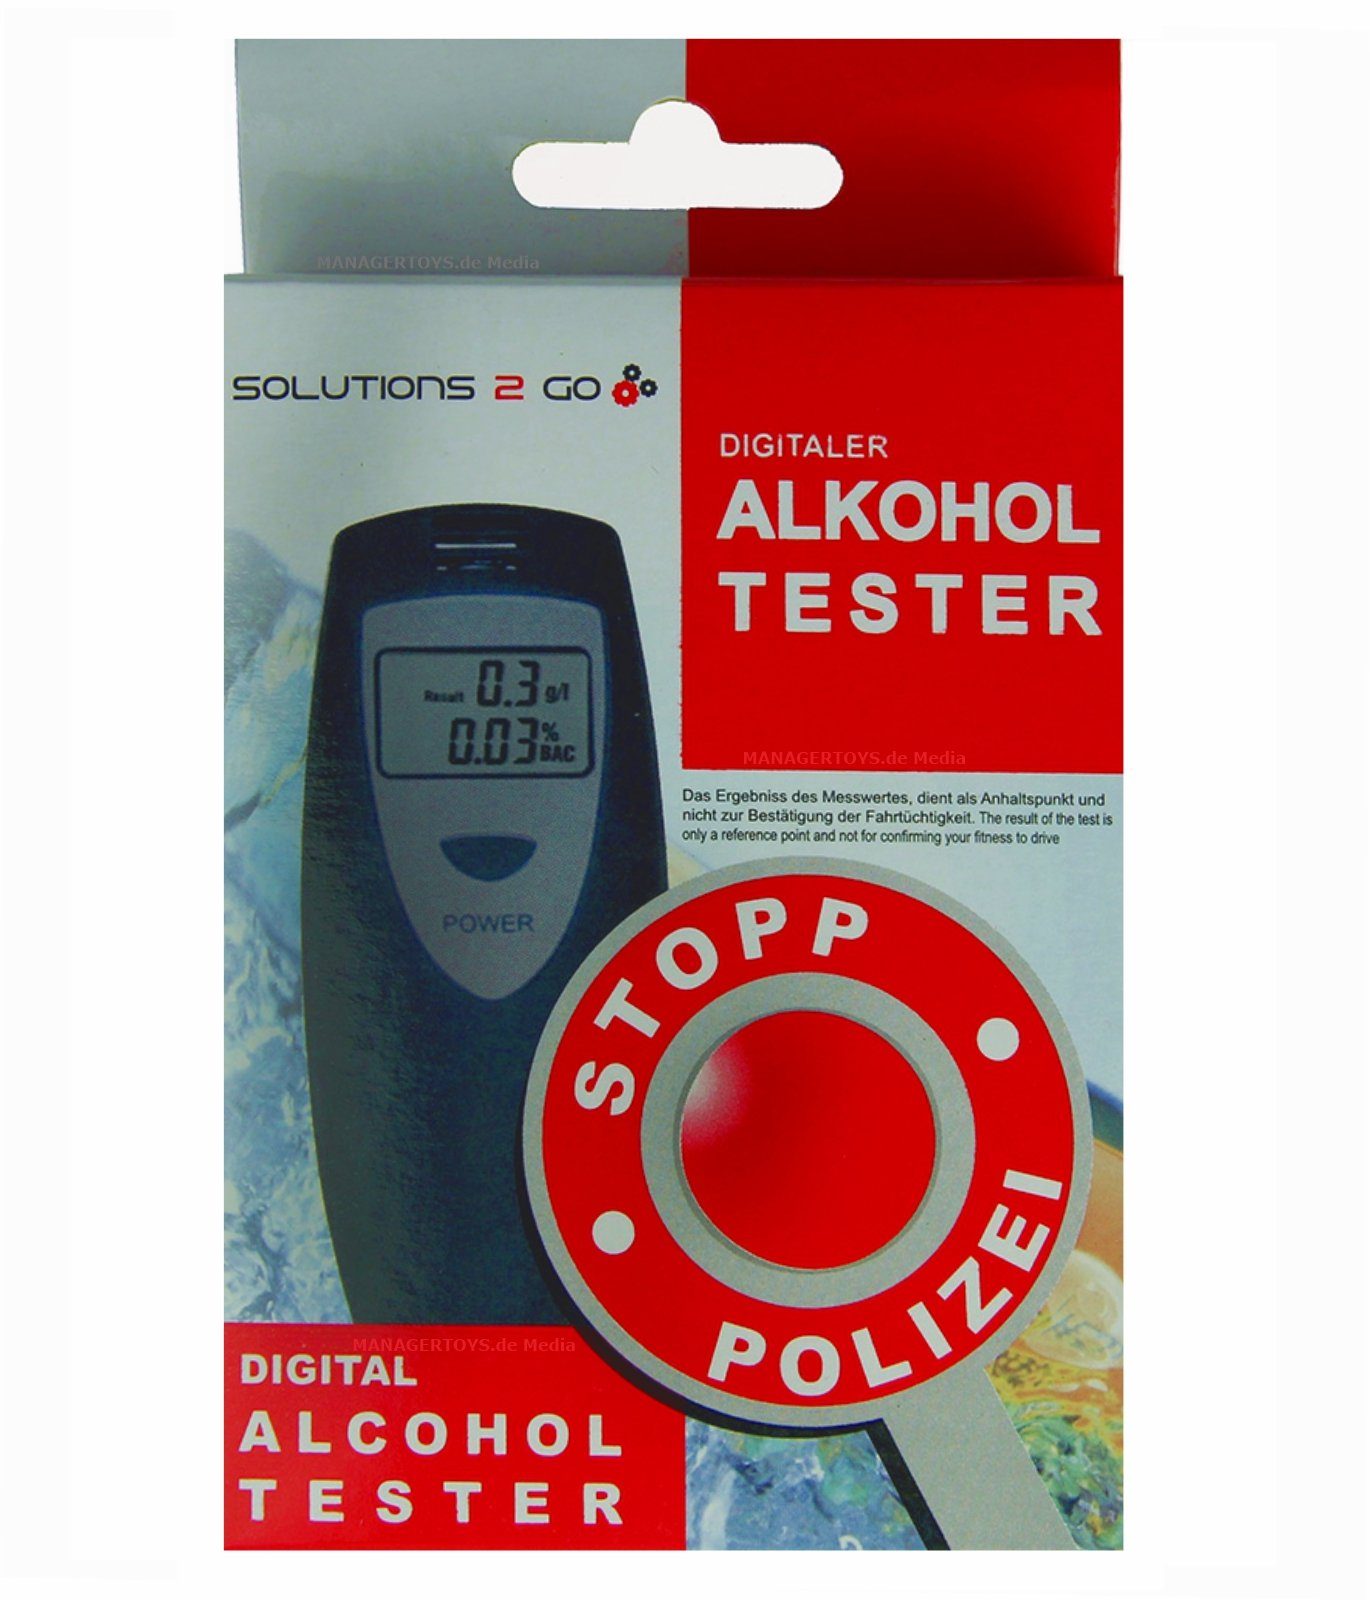 https://i.otto.de/i/otto/f56602d2-884f-4fef-bbff-eb8152c0de80/hp-autozubehoer-feuchtigkeitssensor-digitaler-alkoholtester-mobiles-alkohol-test-geraet-promille-tester.jpg?$formatz$